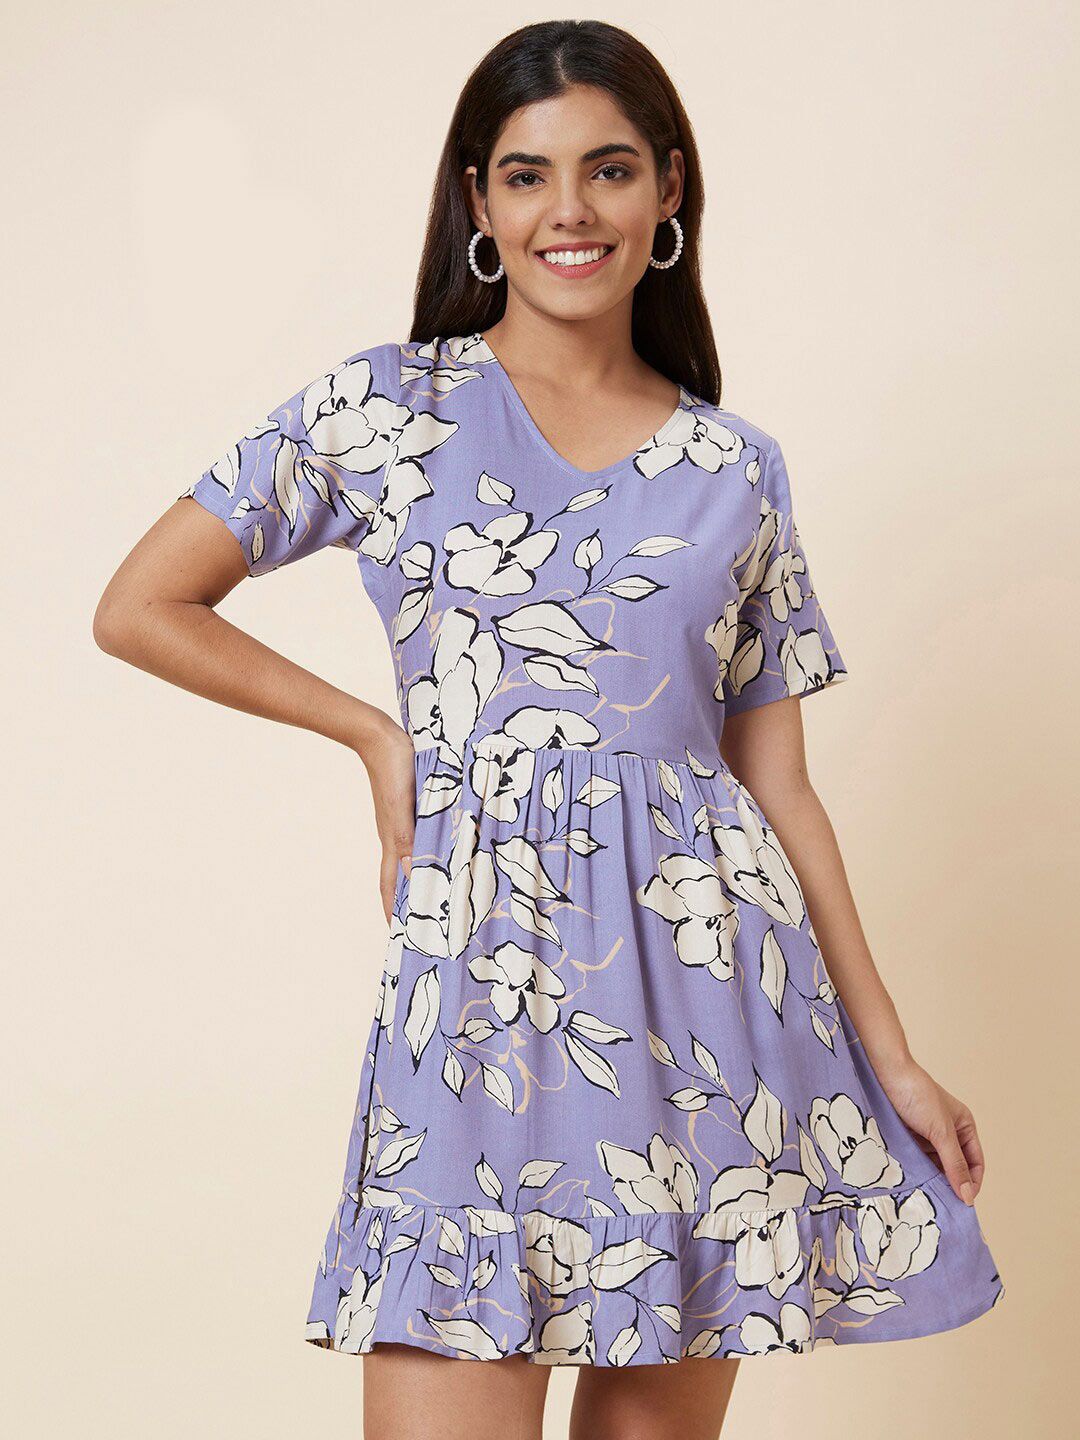 Globus Purple Floral Print Dress Price in India